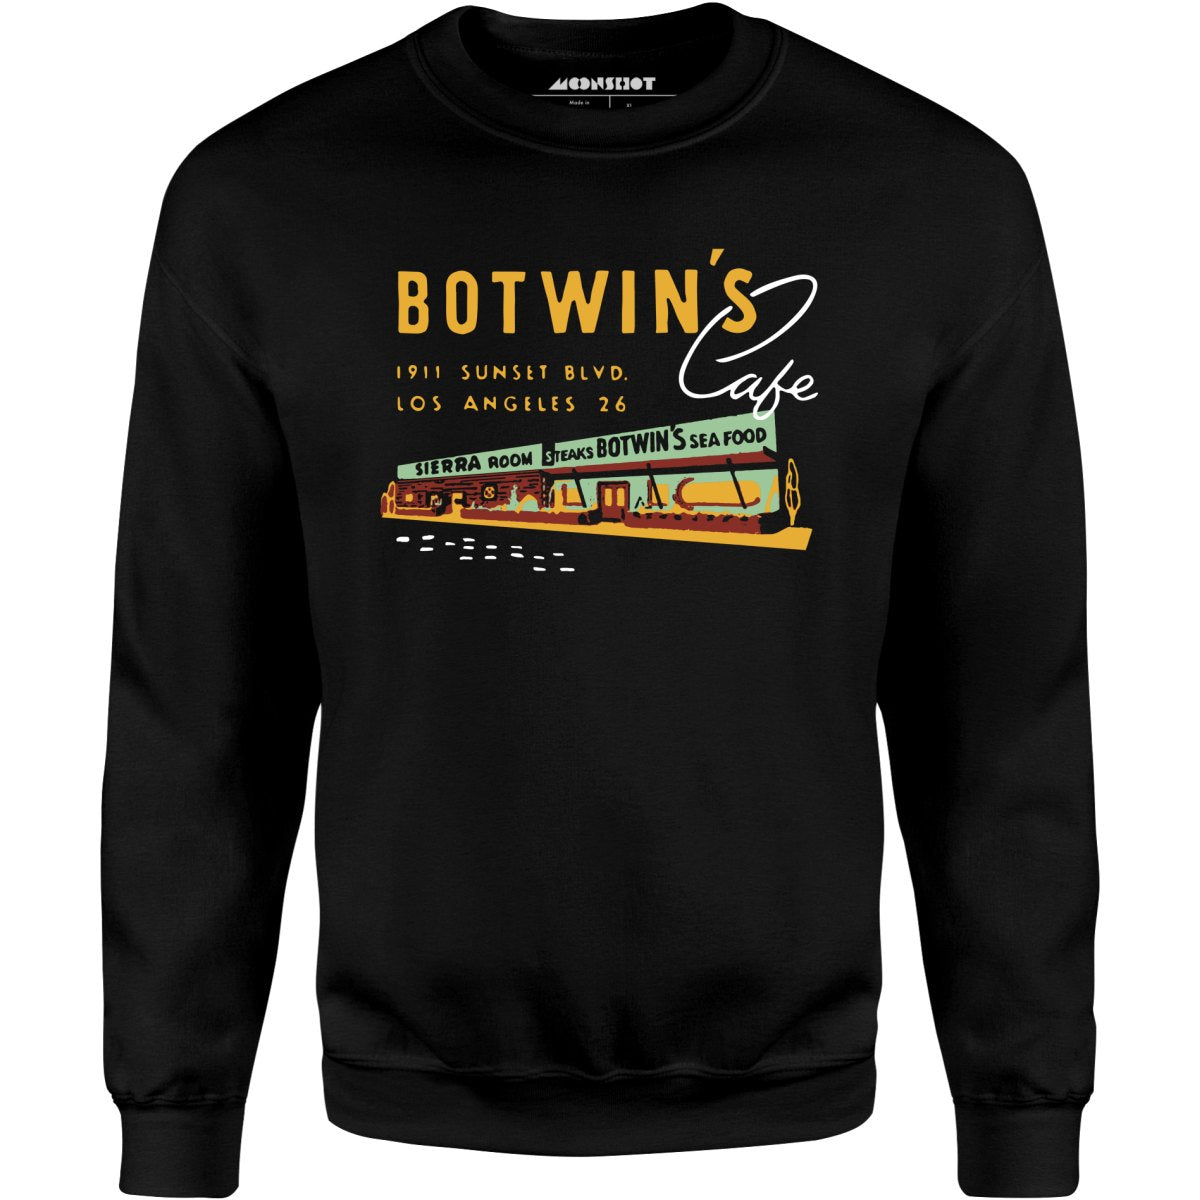 Botwin's Cafe - Los Angeles, CA - Vintage Restaurant - Unisex Sweatshirt